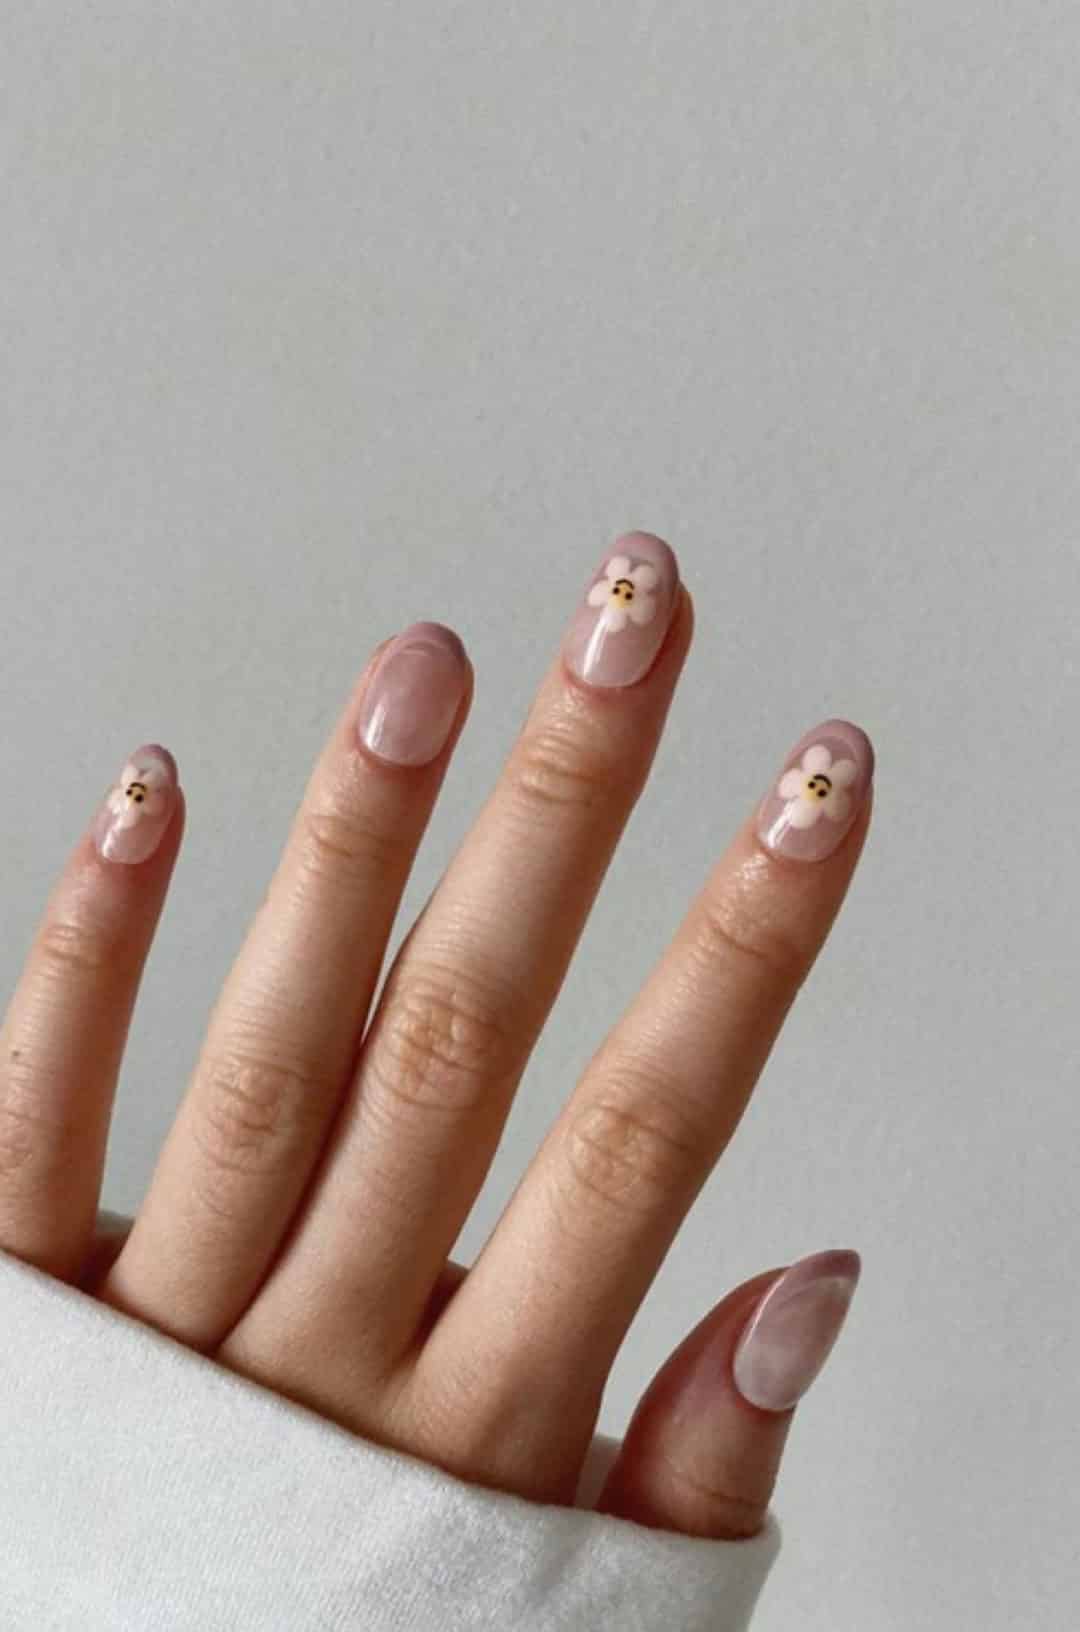 daisy nail designs